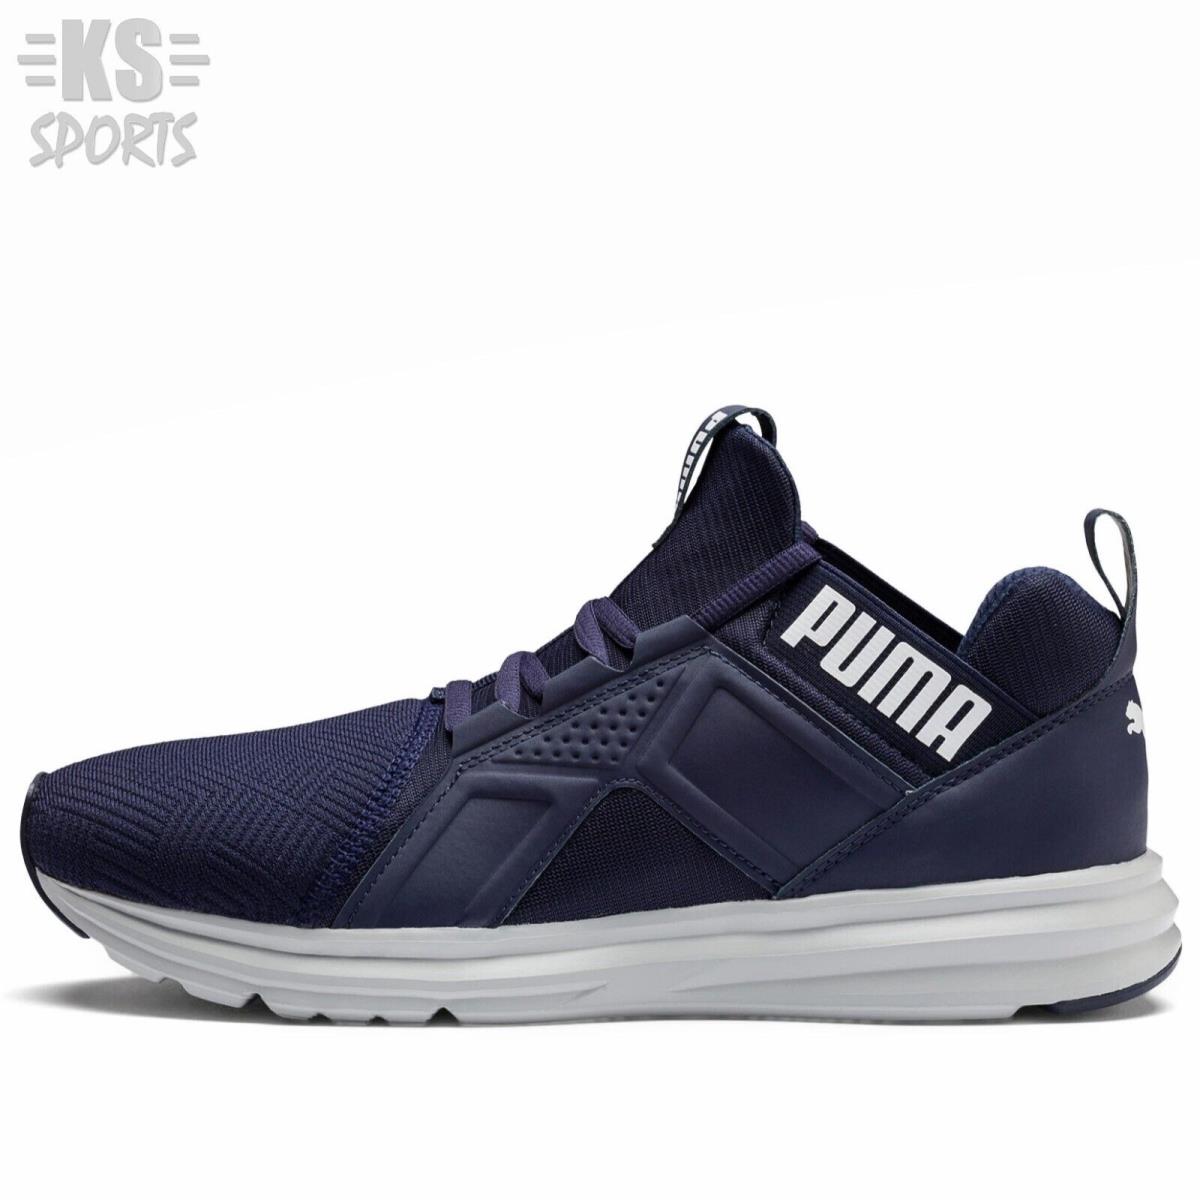 Puma Enzo Geo `peacoat` Men`s Athletic Running Shoes 192594-01 Size 11.5 - Peacoat/Blue